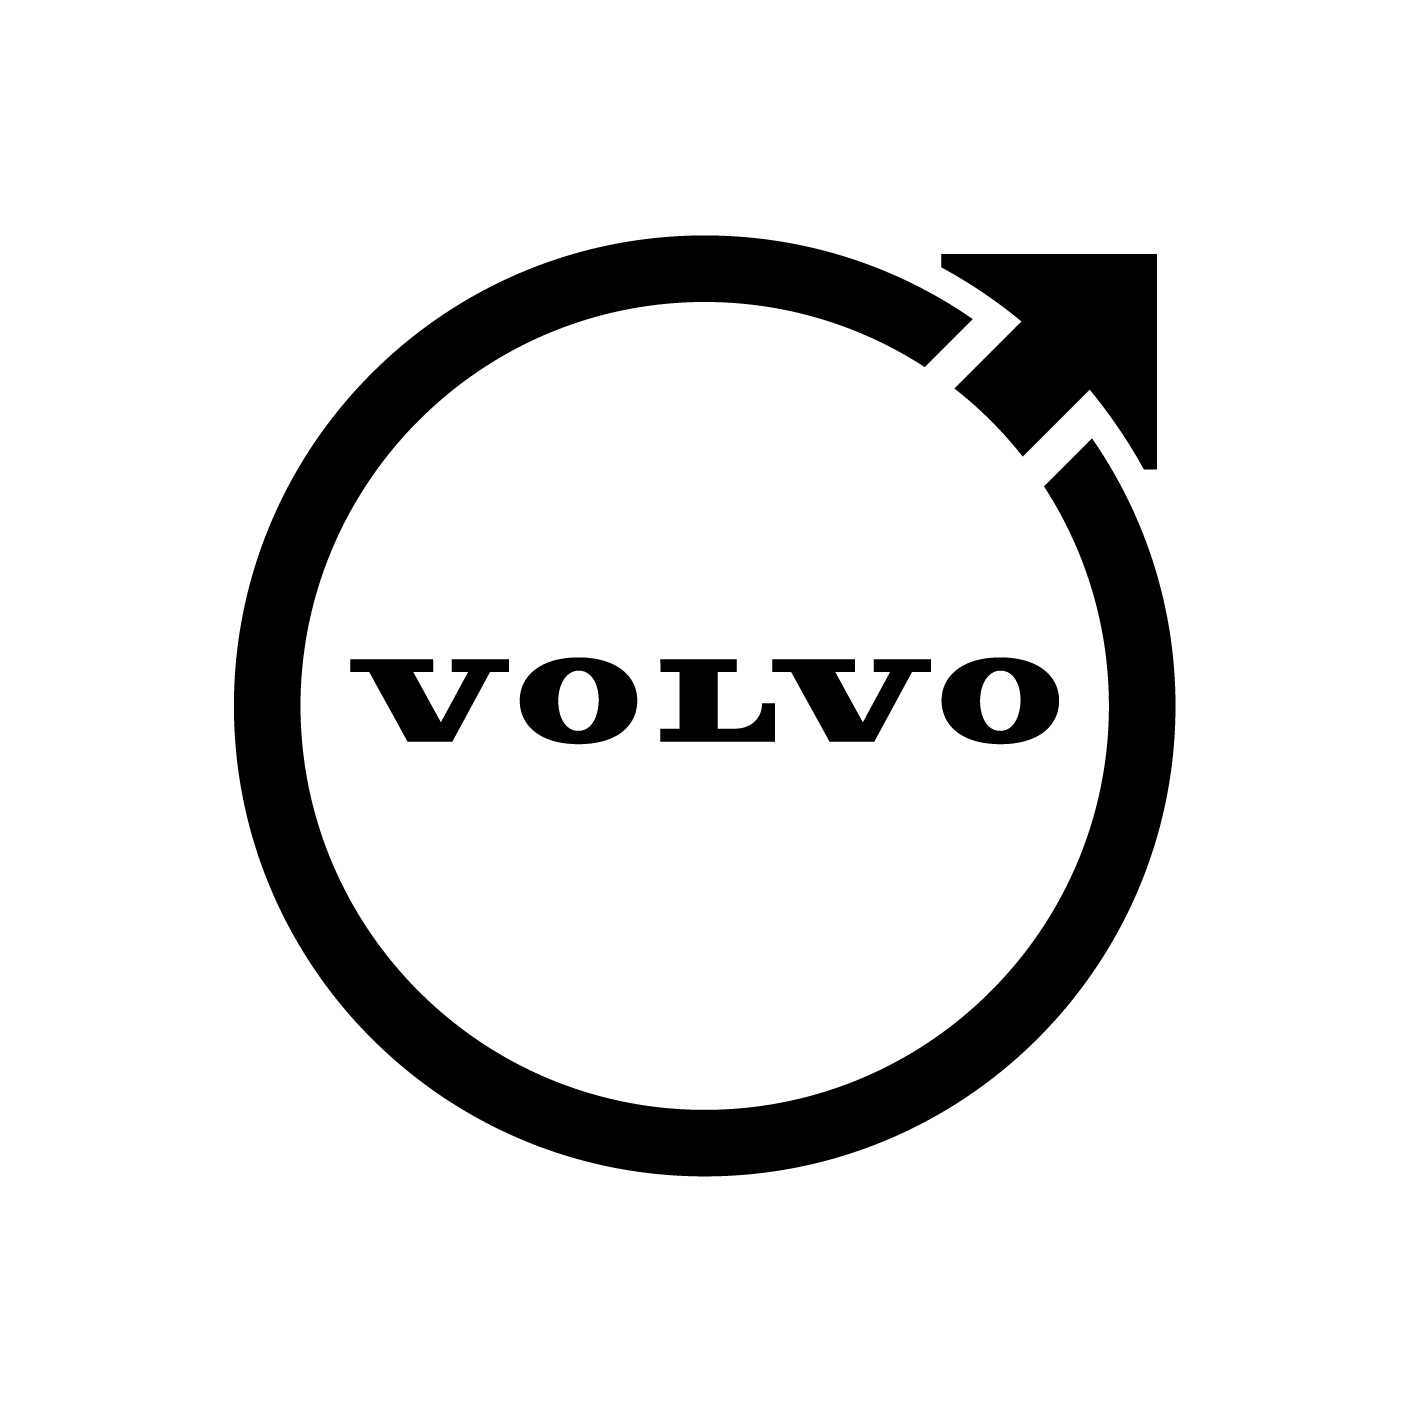 Volvo mark